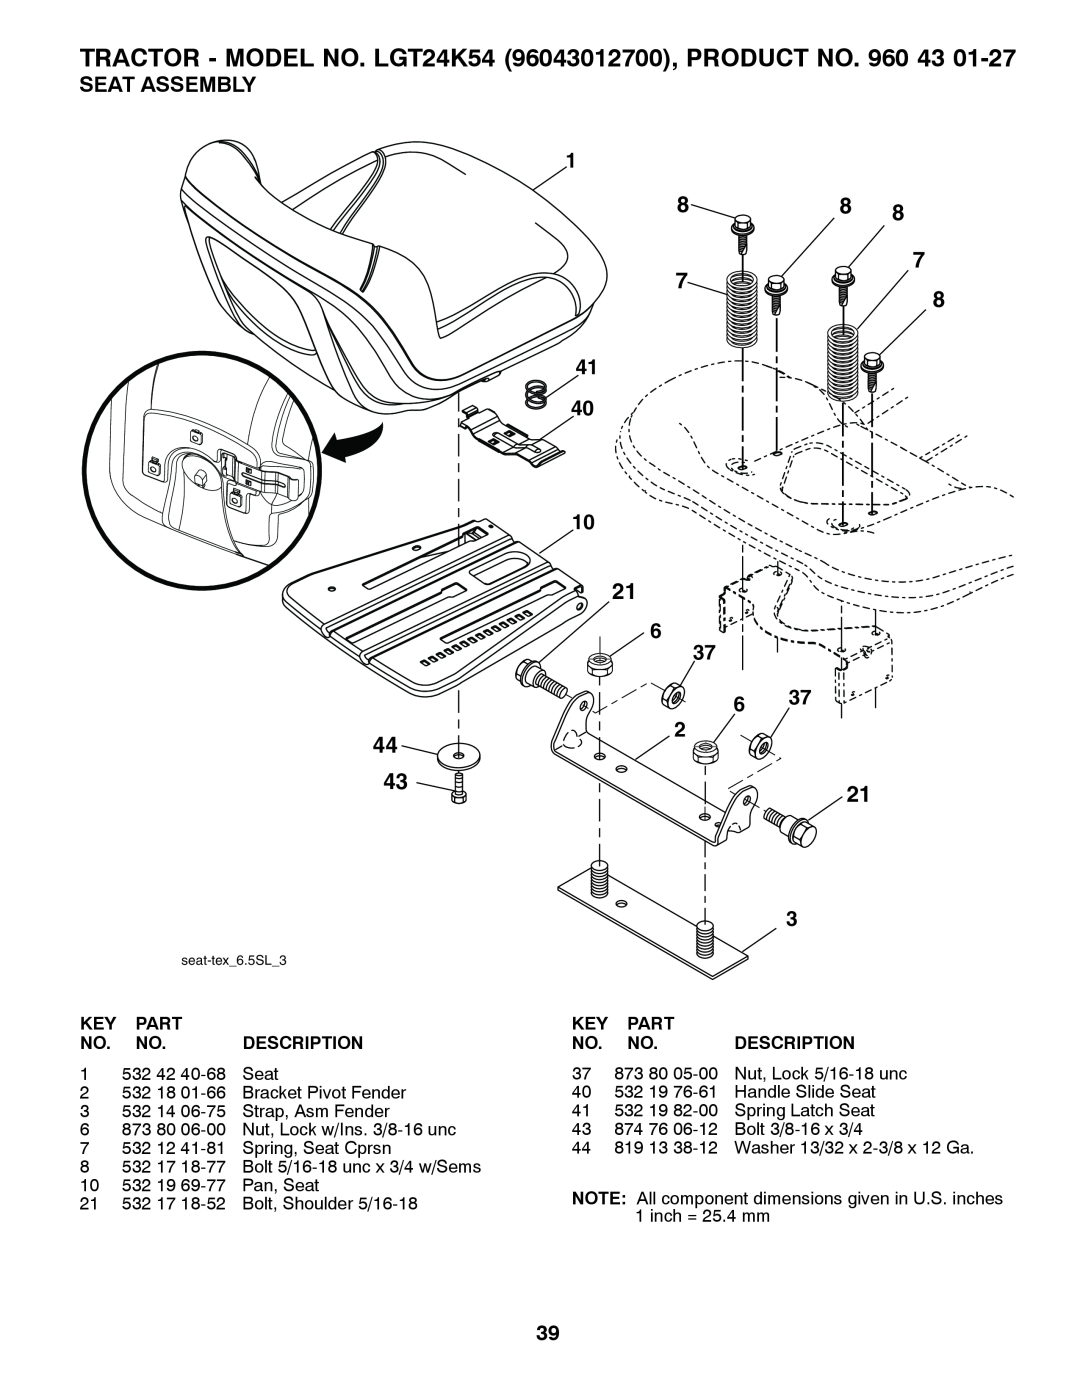 Husqvarna owner manual Seat Assembly, TRACTOR - MODEL NO. LGT24K54 96043012700, PRODUCT NO. 960 43, seat-tex6.5SL3 